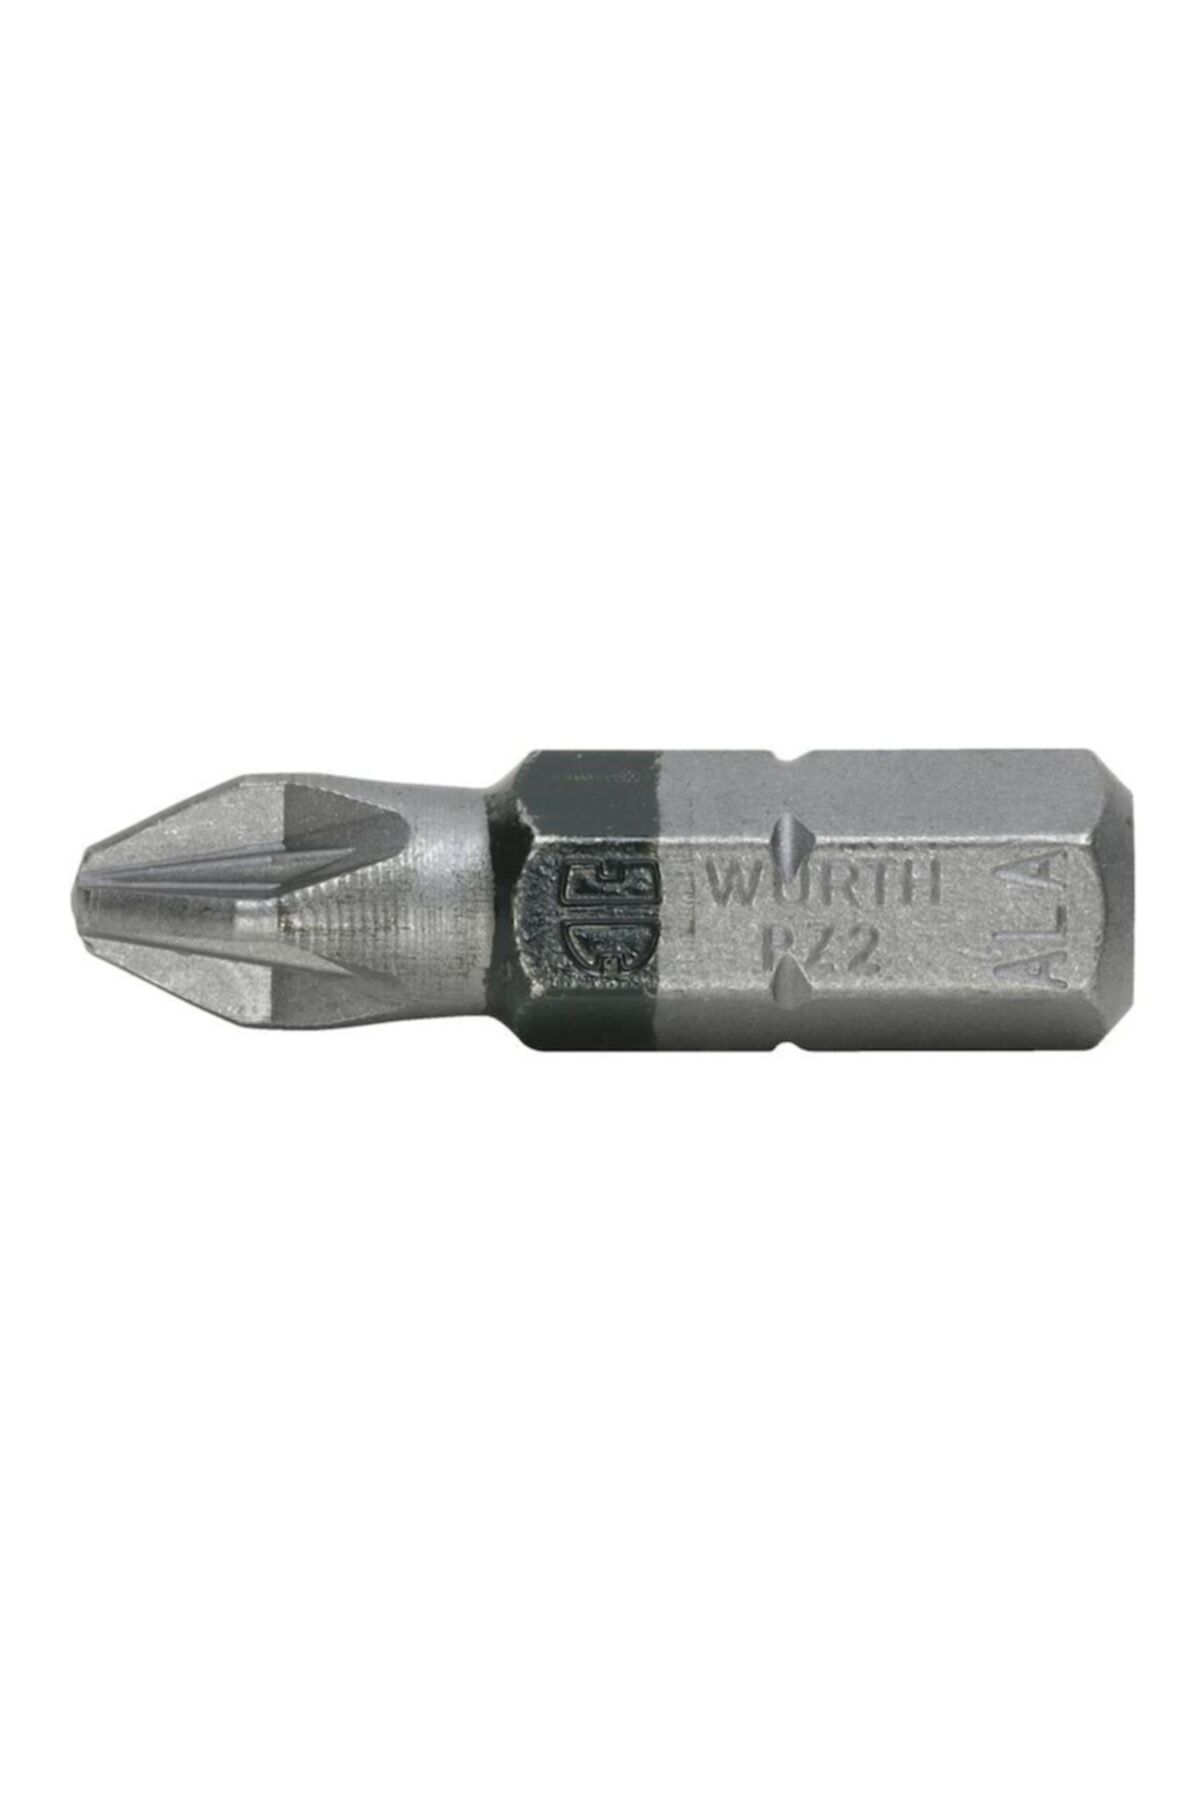 Würth Bits Uç-pz2-1/4ı-25mm 10 Adet